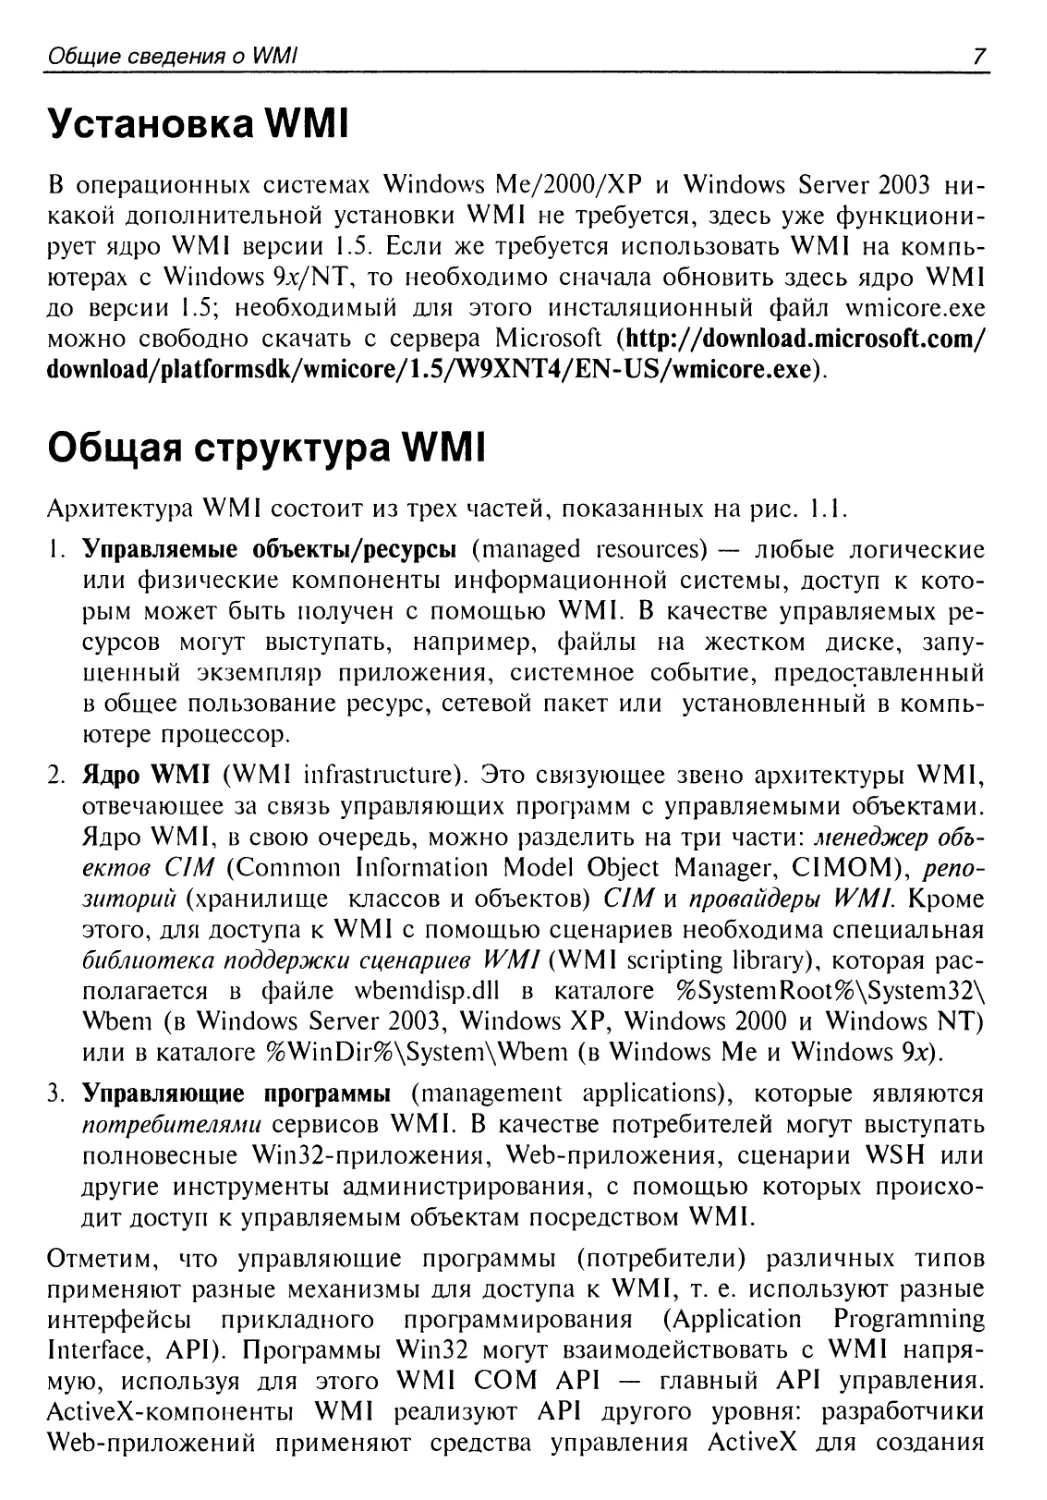 Установка WMI
Общая структура WMI